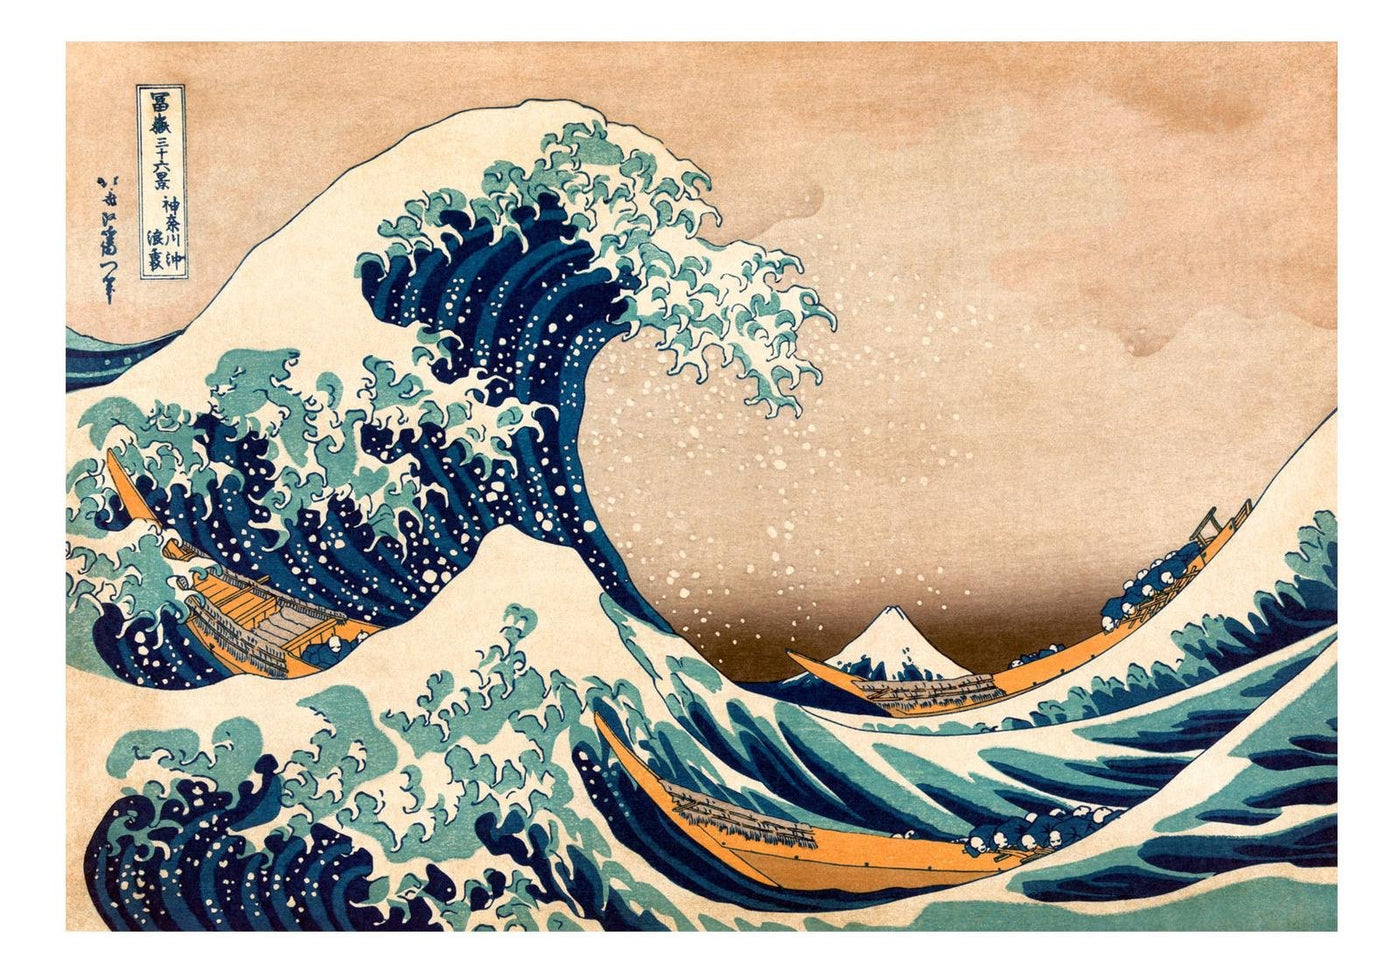 Wall mural - Hokusai: The Great Wave off Kanagawa-TipTopHomeDecor